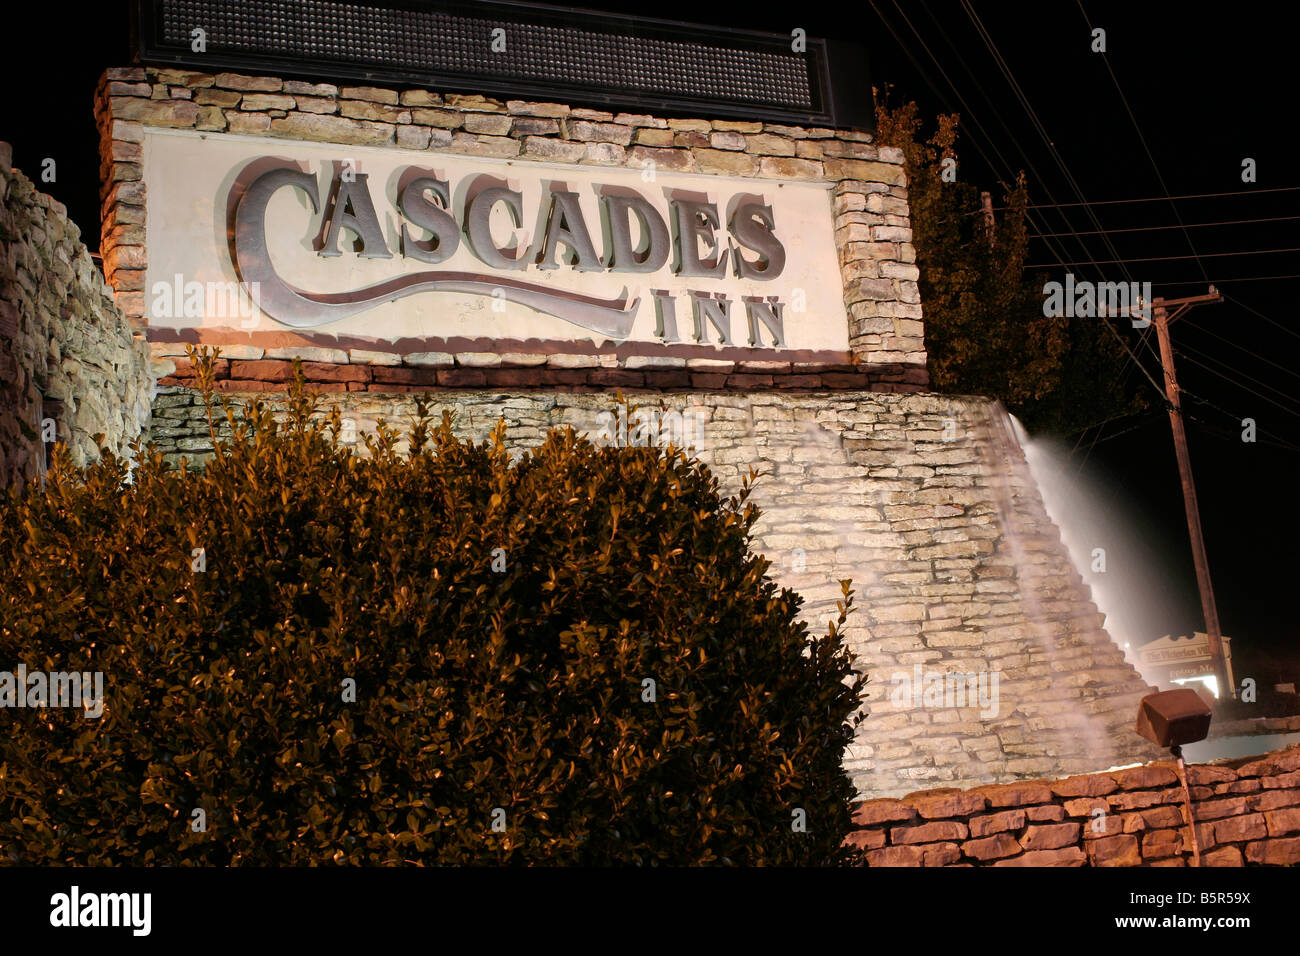 Cascades Inn motel sign at night, Branson Missouri Stock Photo